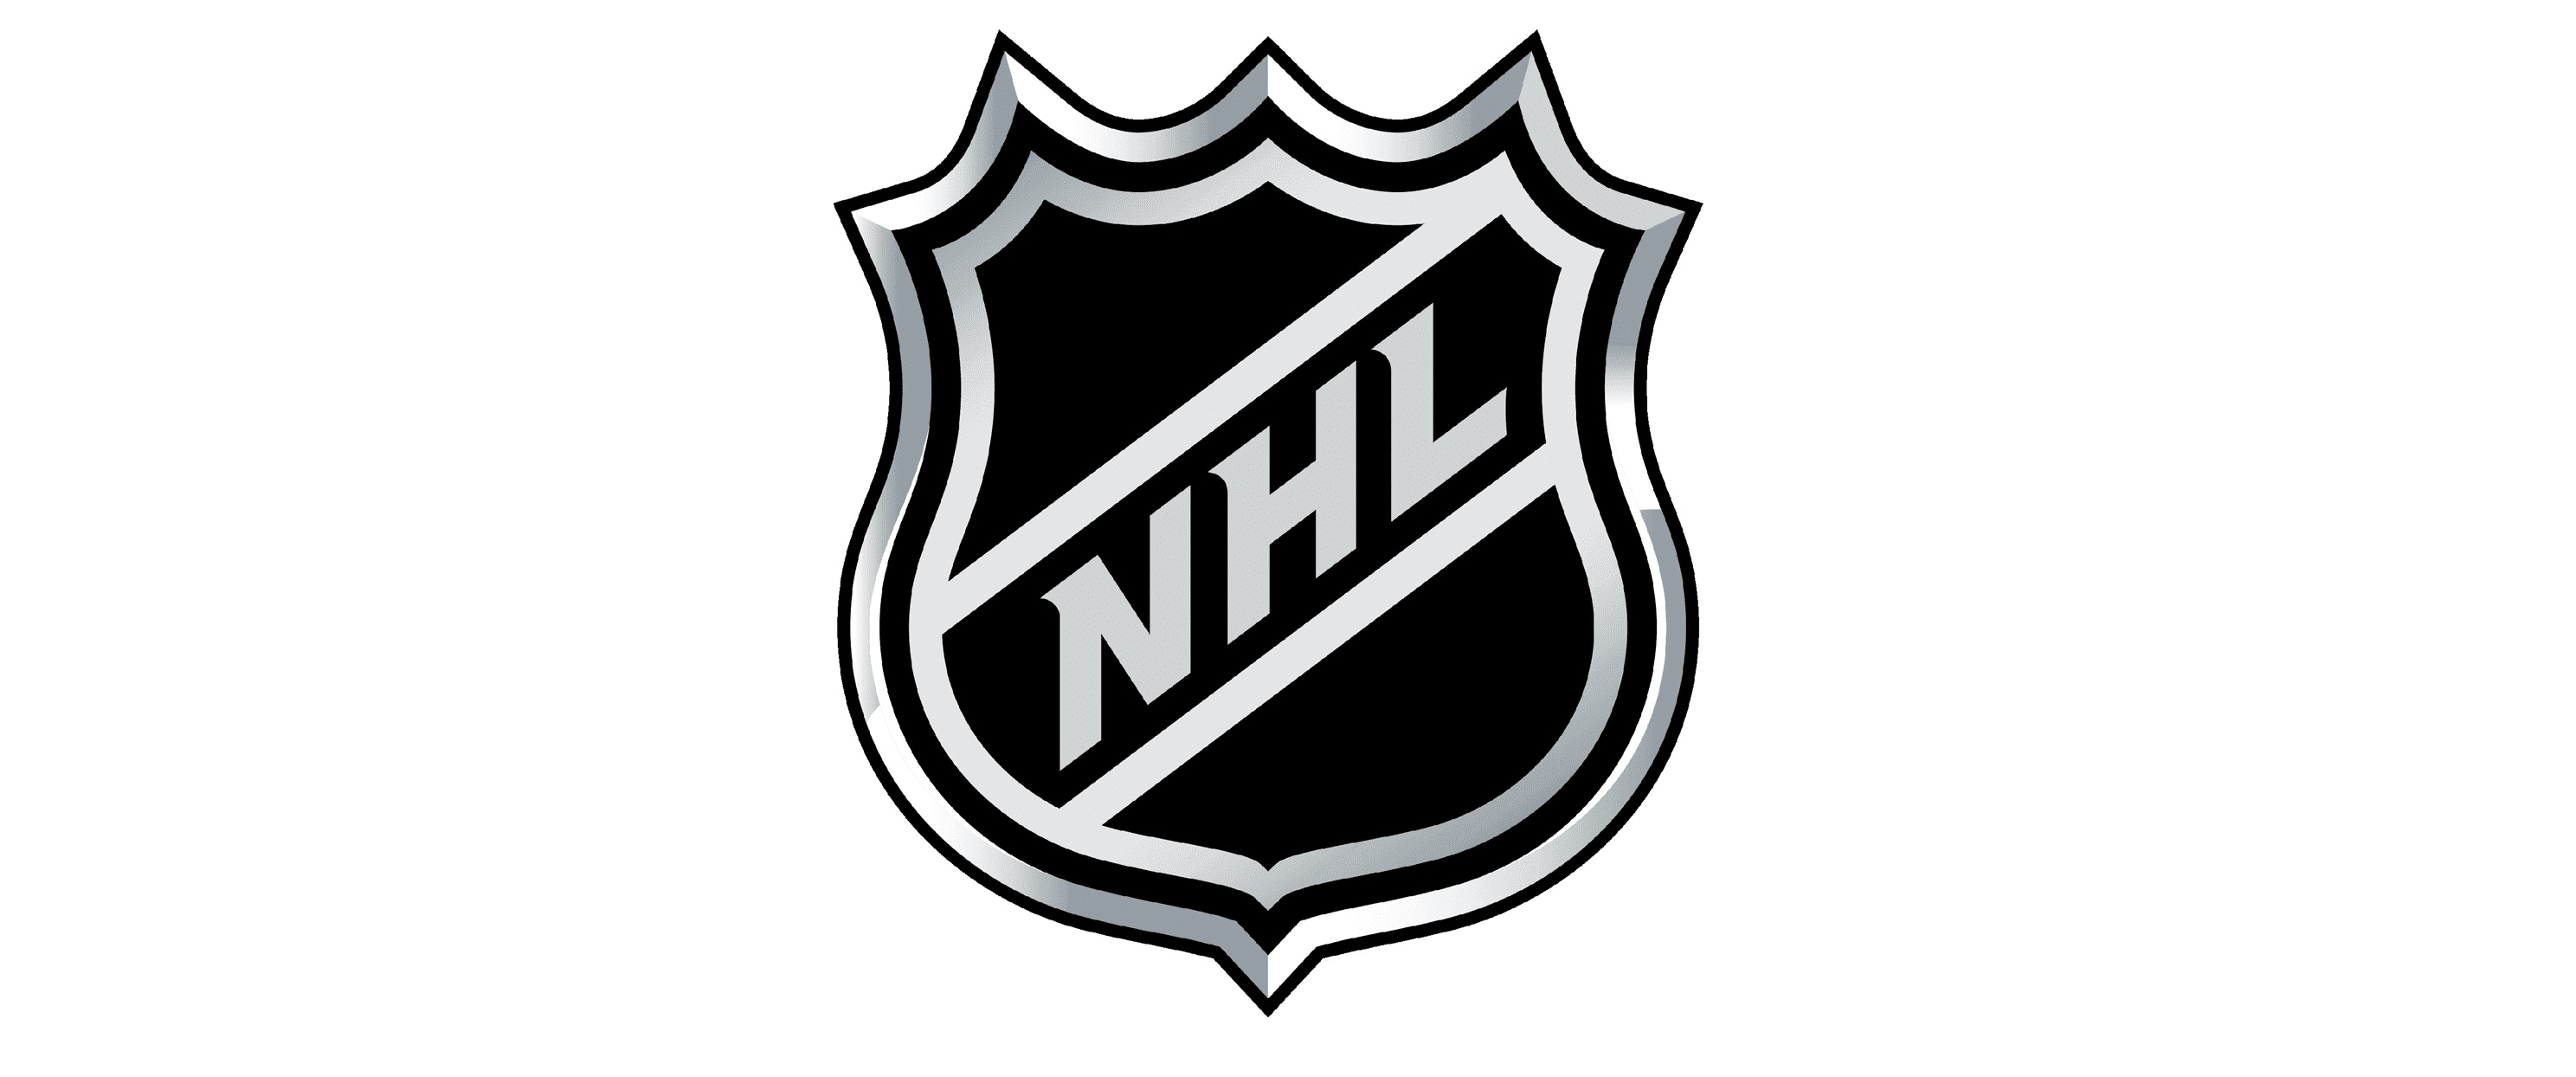 Edmonton Oilers vs Vancouver Canucks Live Stream live Stream Free and